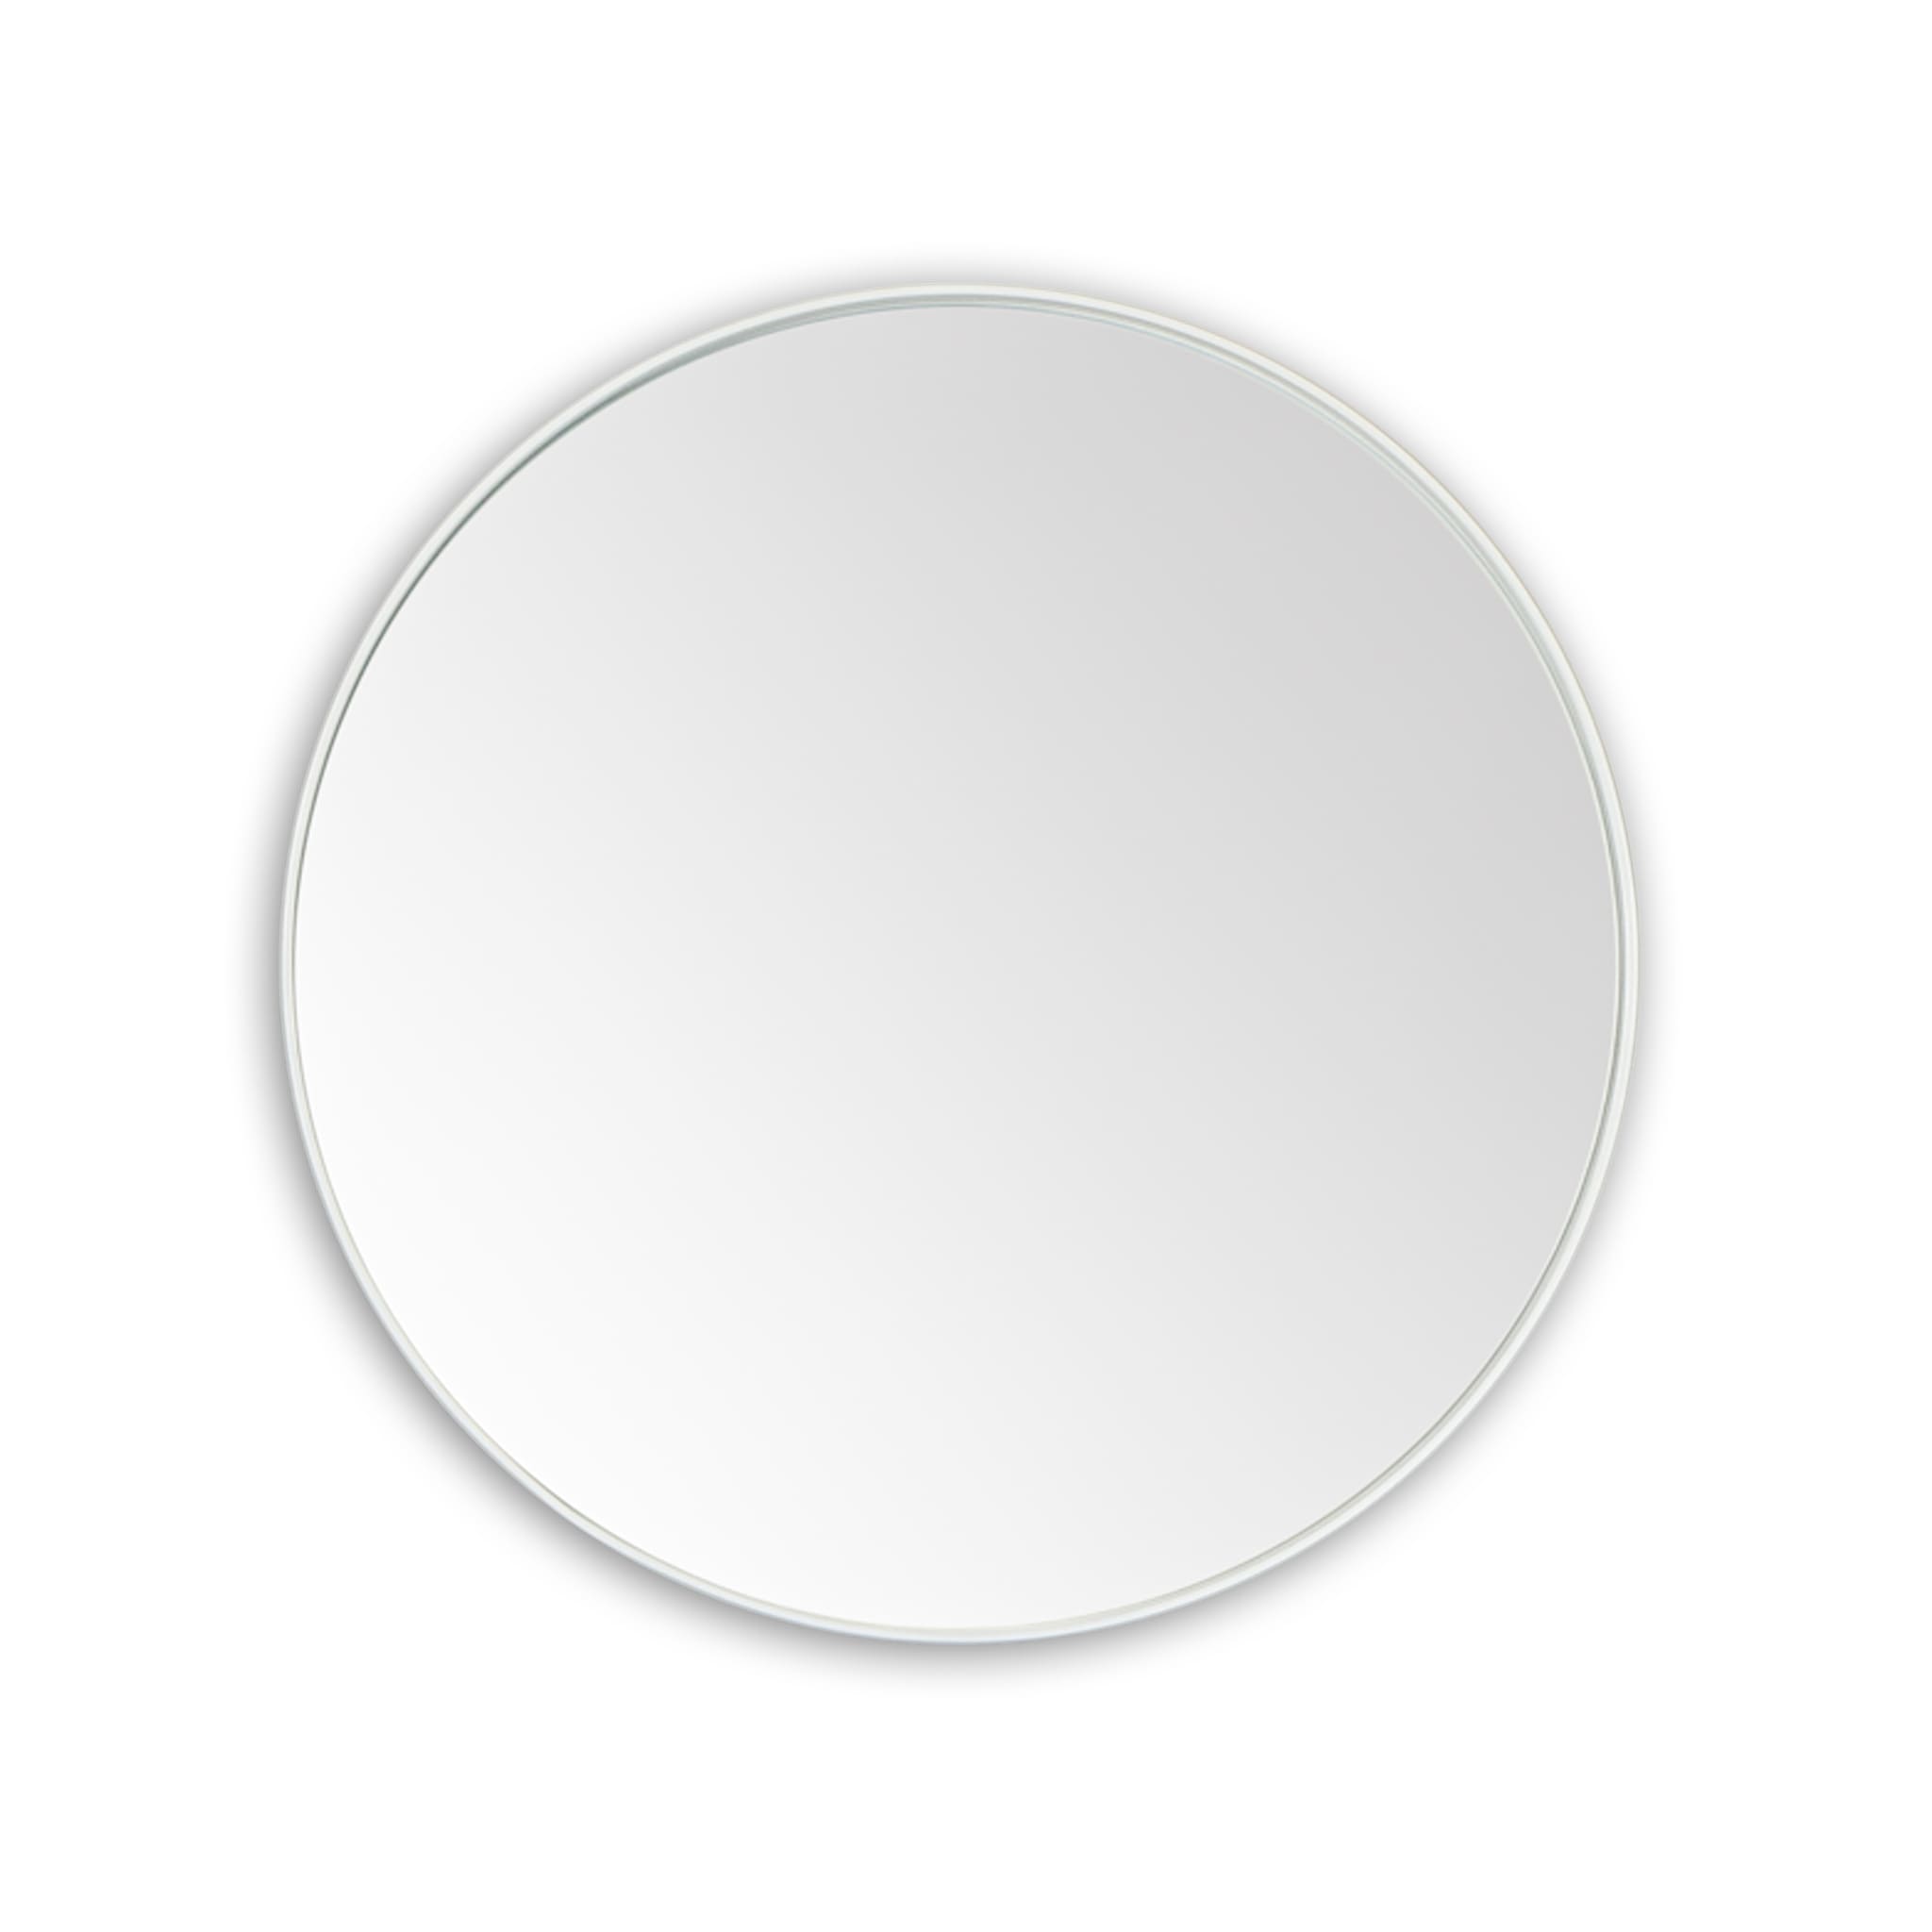  Bathroom Round Mirror Homelero 30"  #size_30"  #color_white